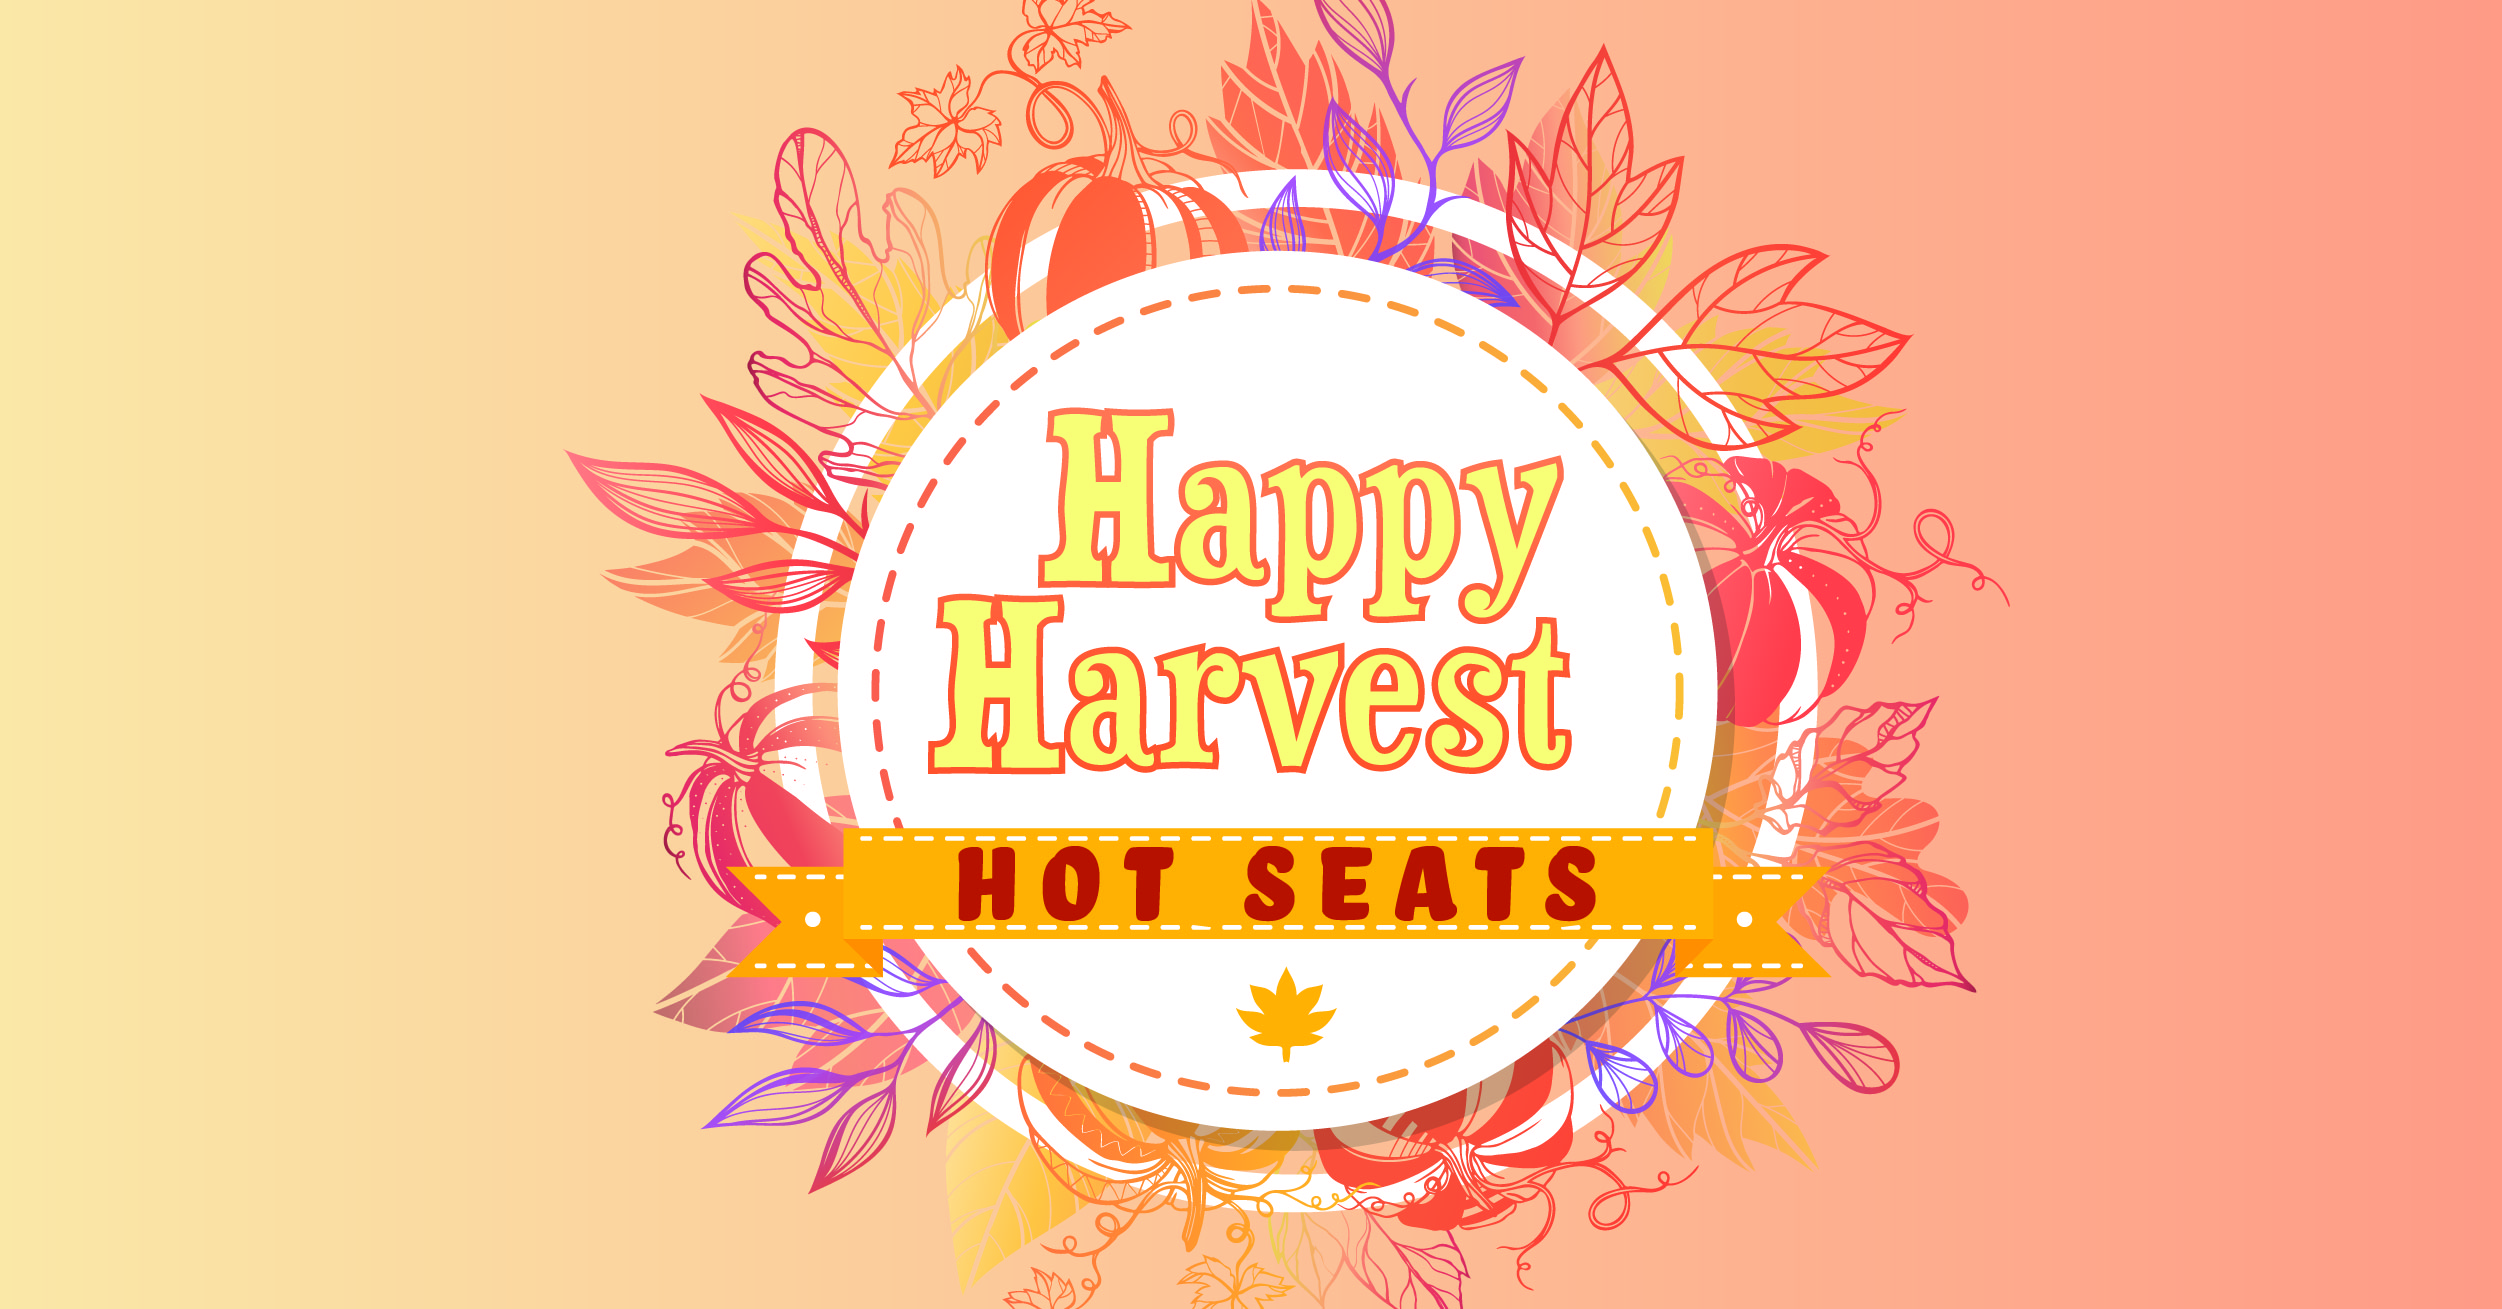 HAPPY HARVEST HOT SEATS